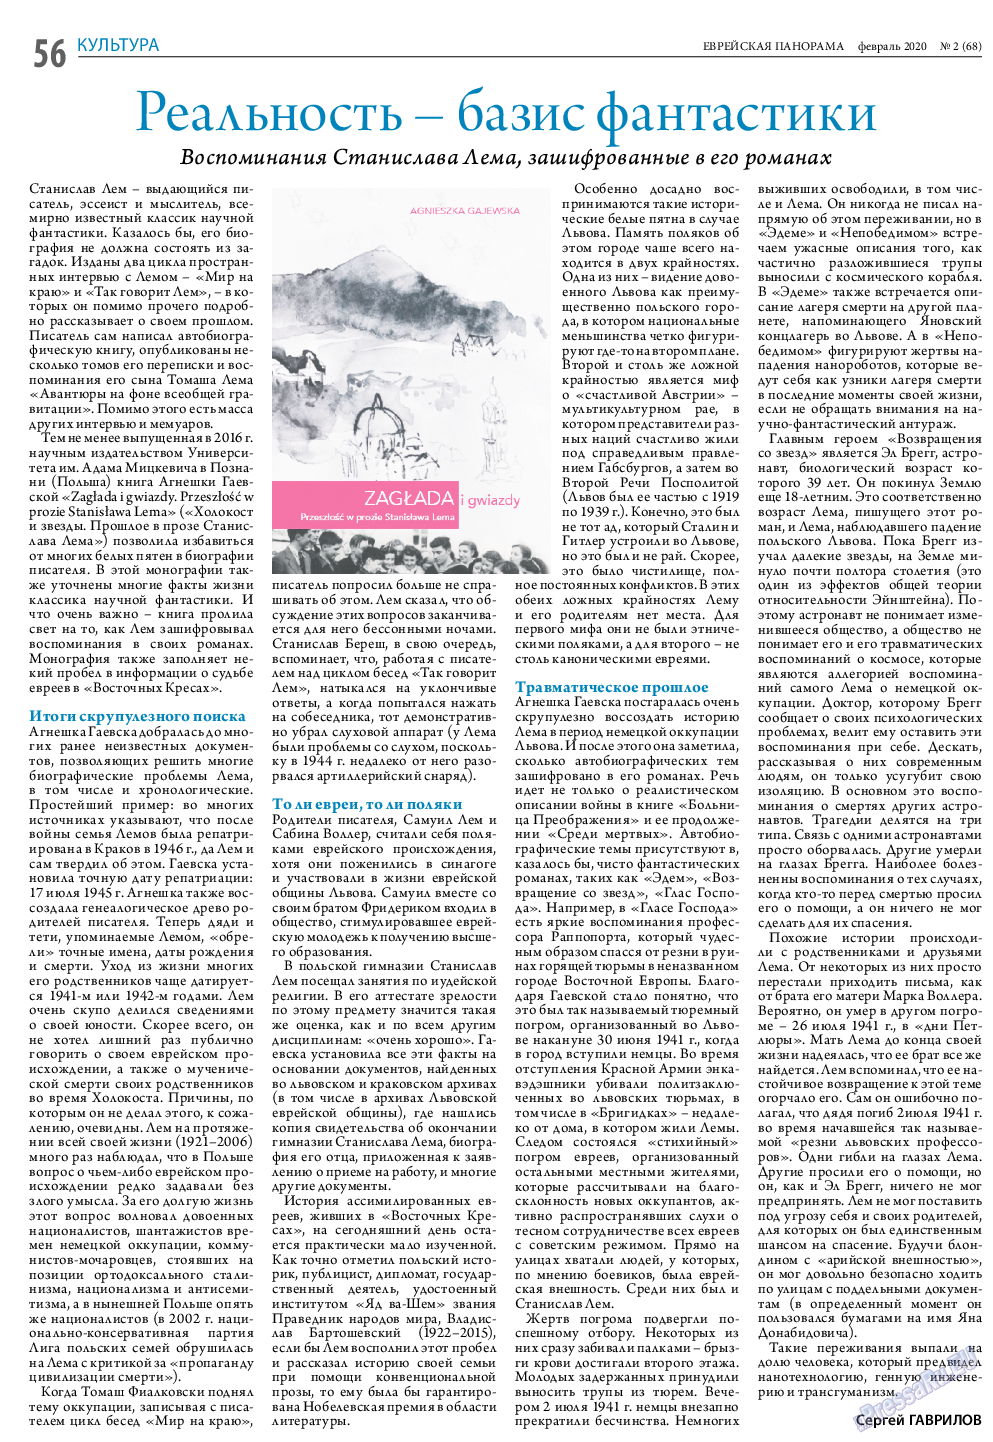 Еврейская панорама, газета. 2020 №2 стр.56